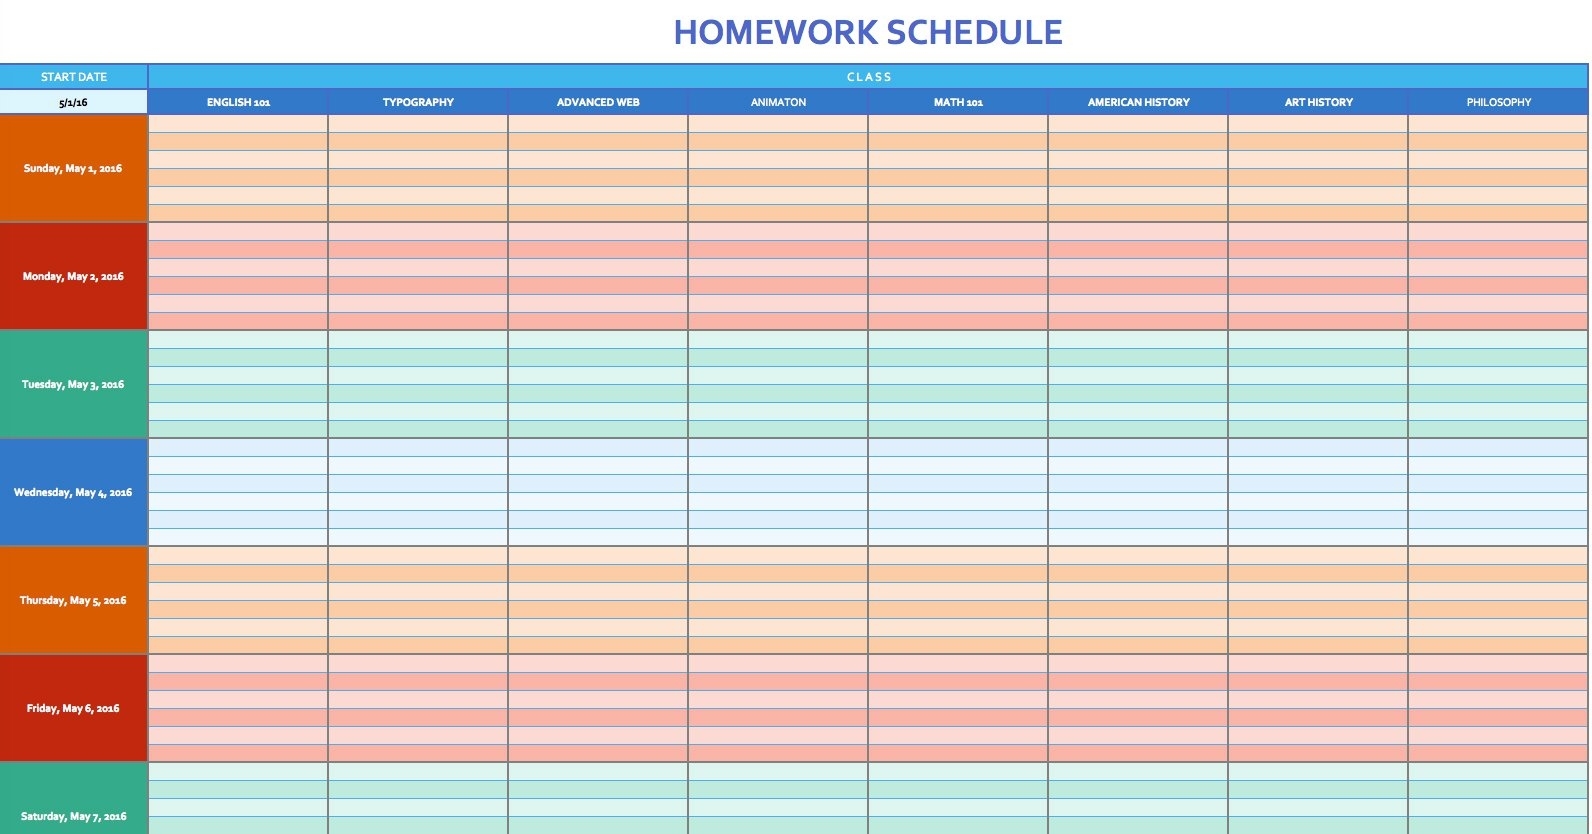 Free Weekly Schedule Templates For Excel - Smartsheet 5 Day Week Calendar Template Excel